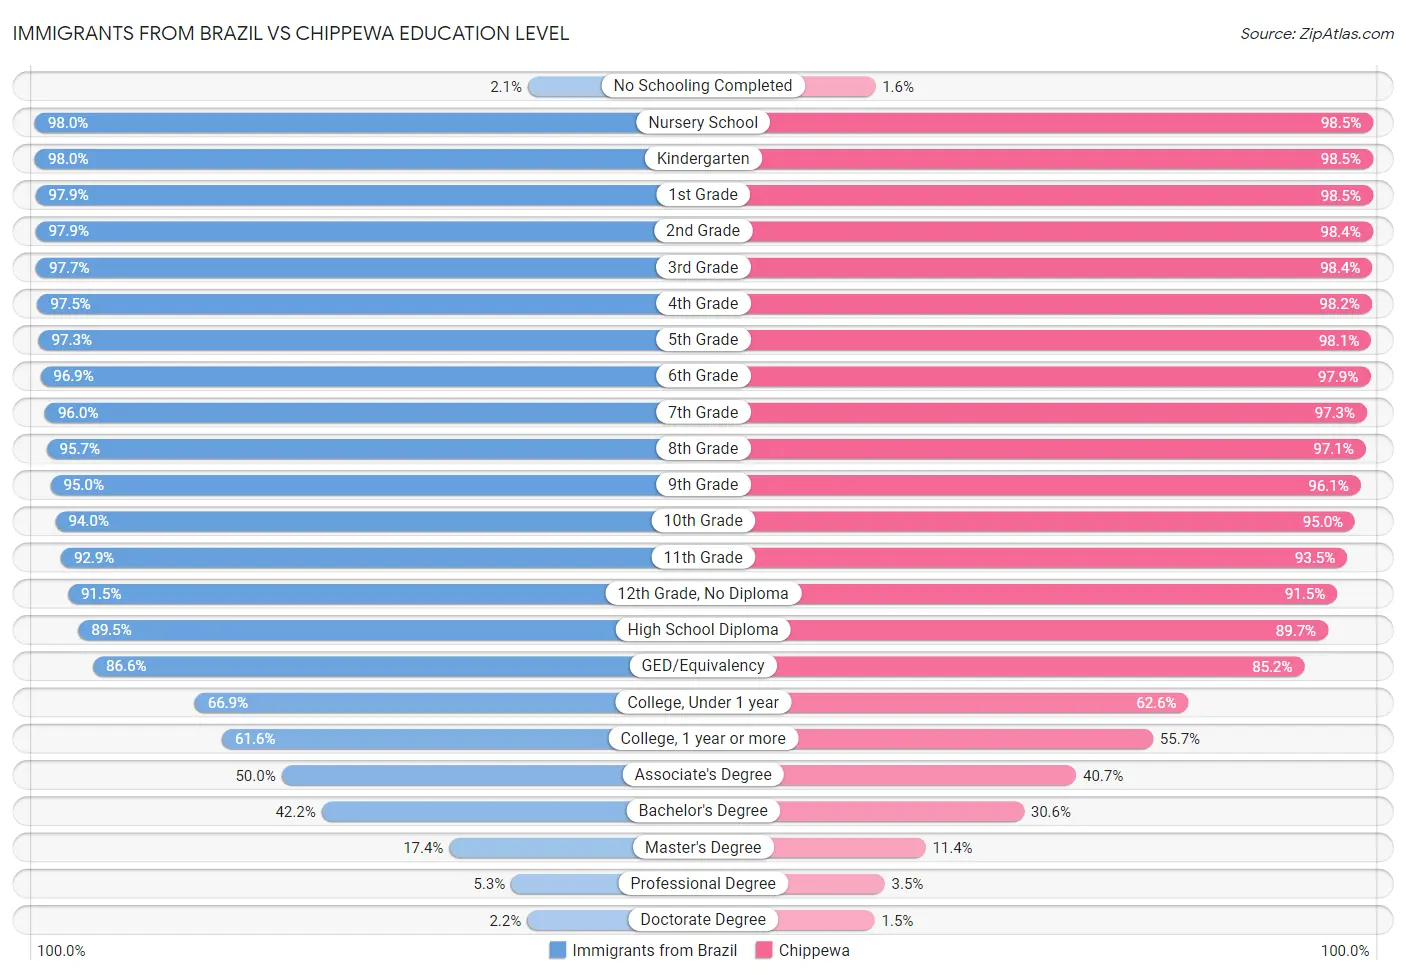 Immigrants from Brazil vs Chippewa Education Level